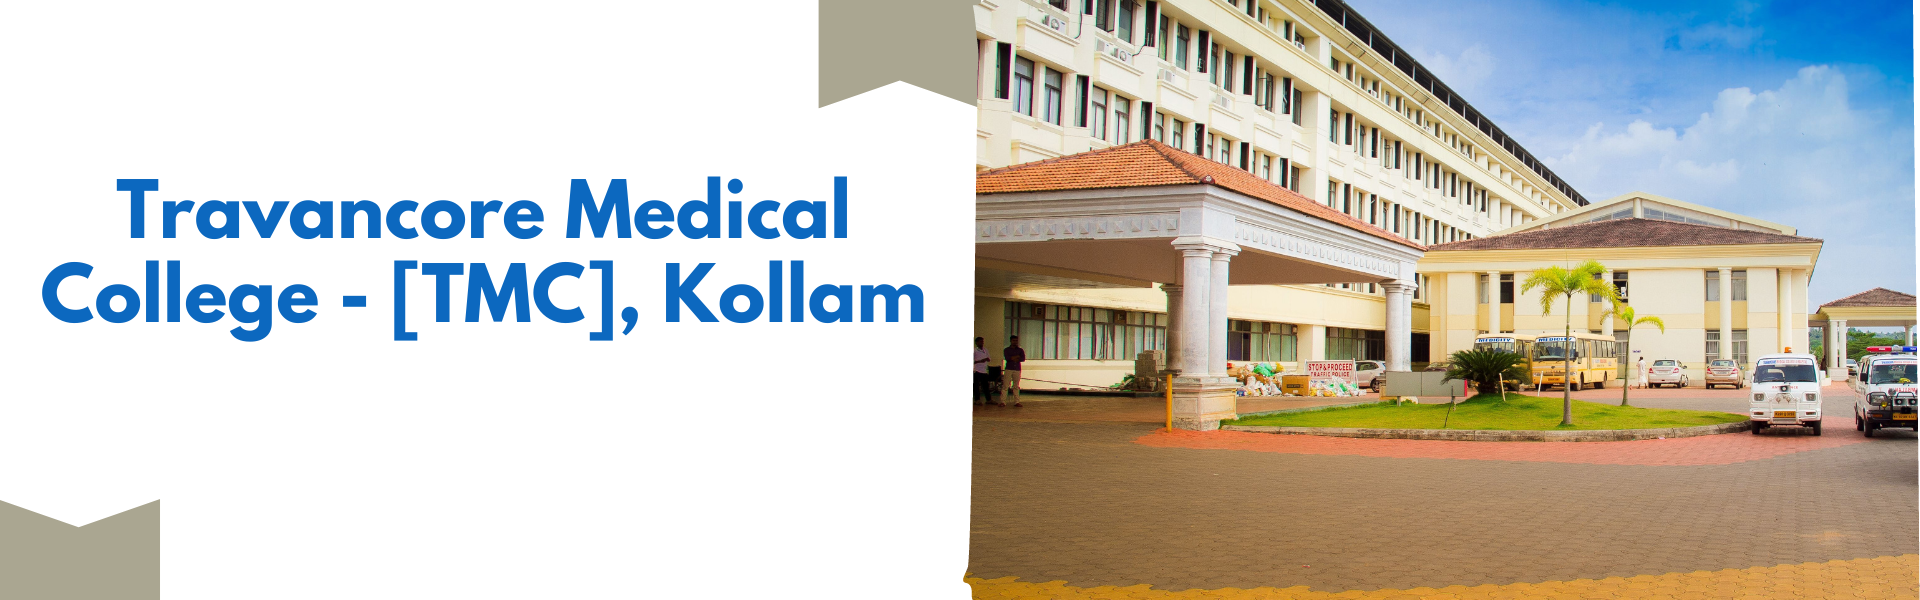 Travancore Medical College - [TMC], Kollam